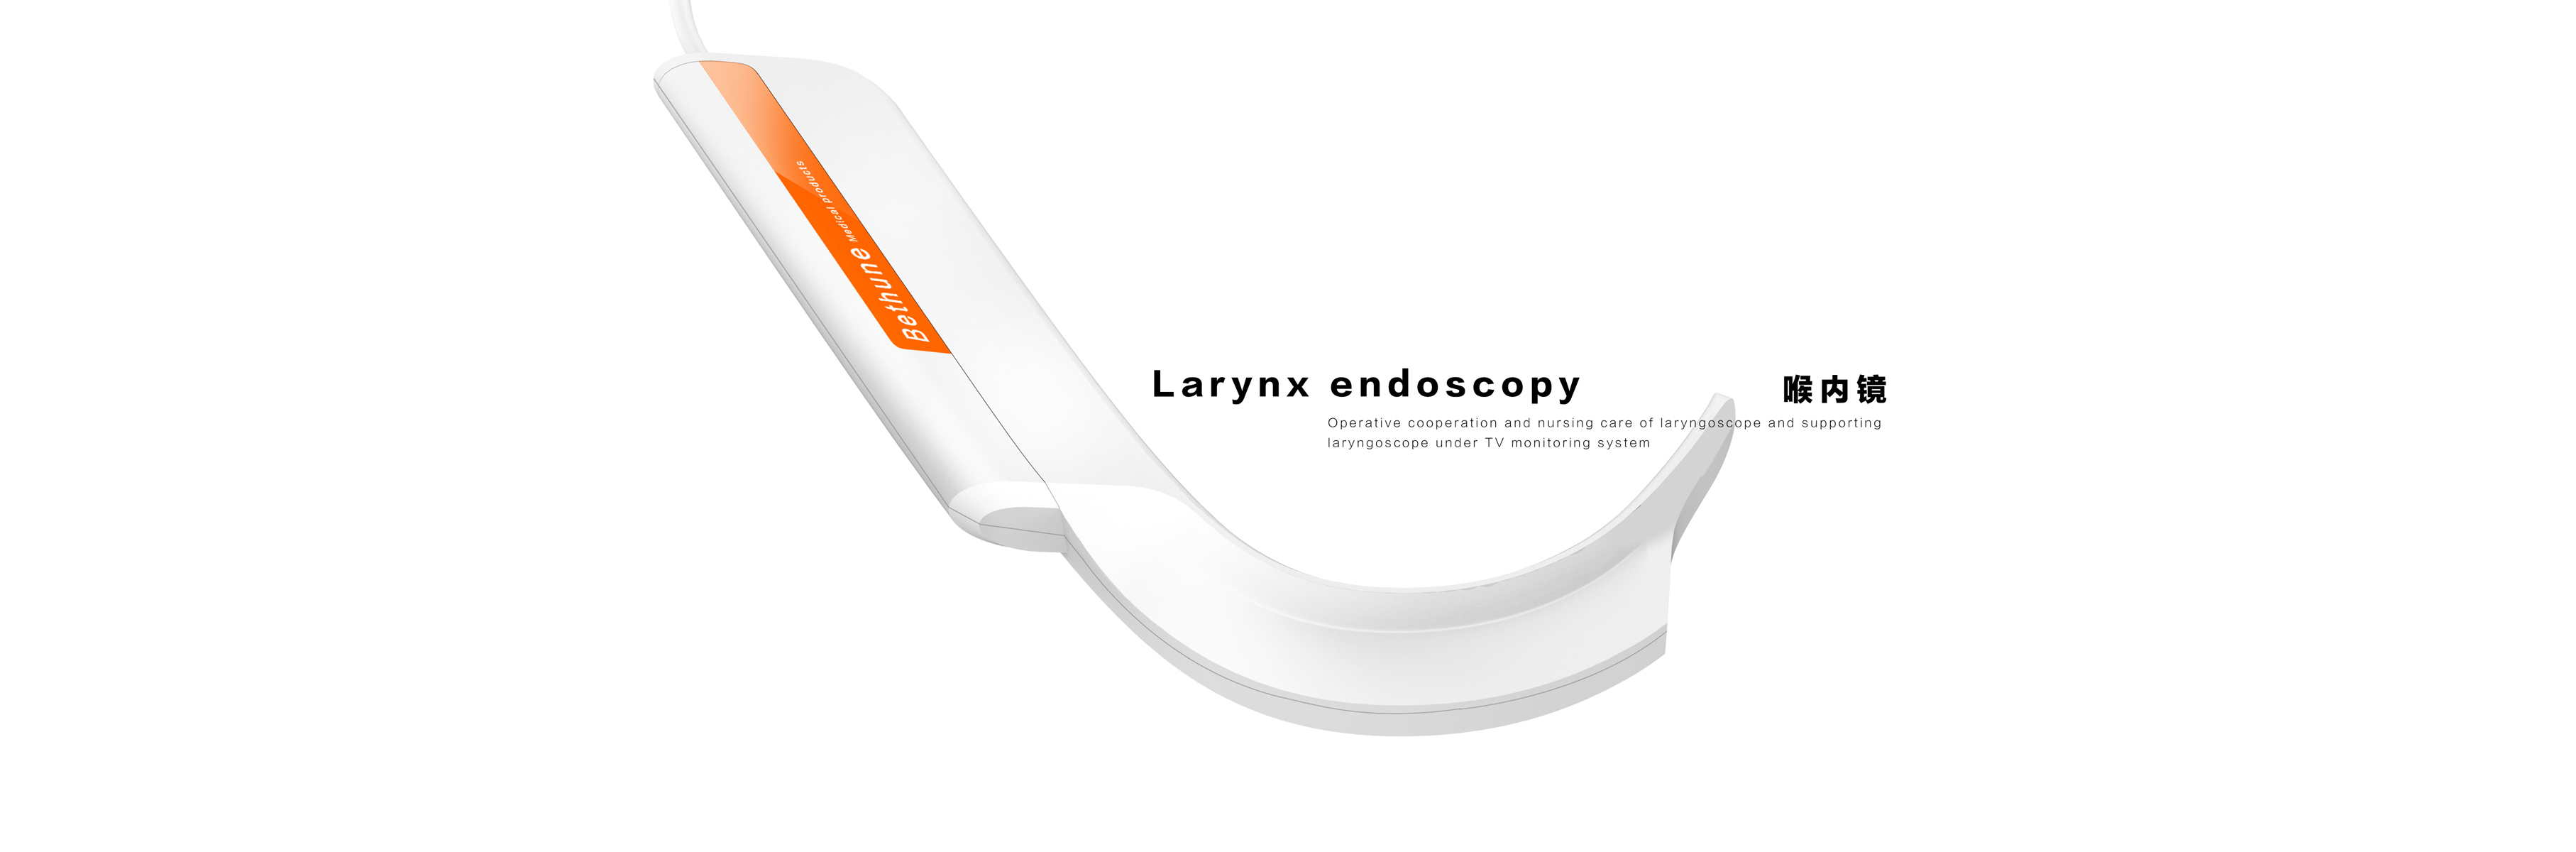 Disposable laryngoscope